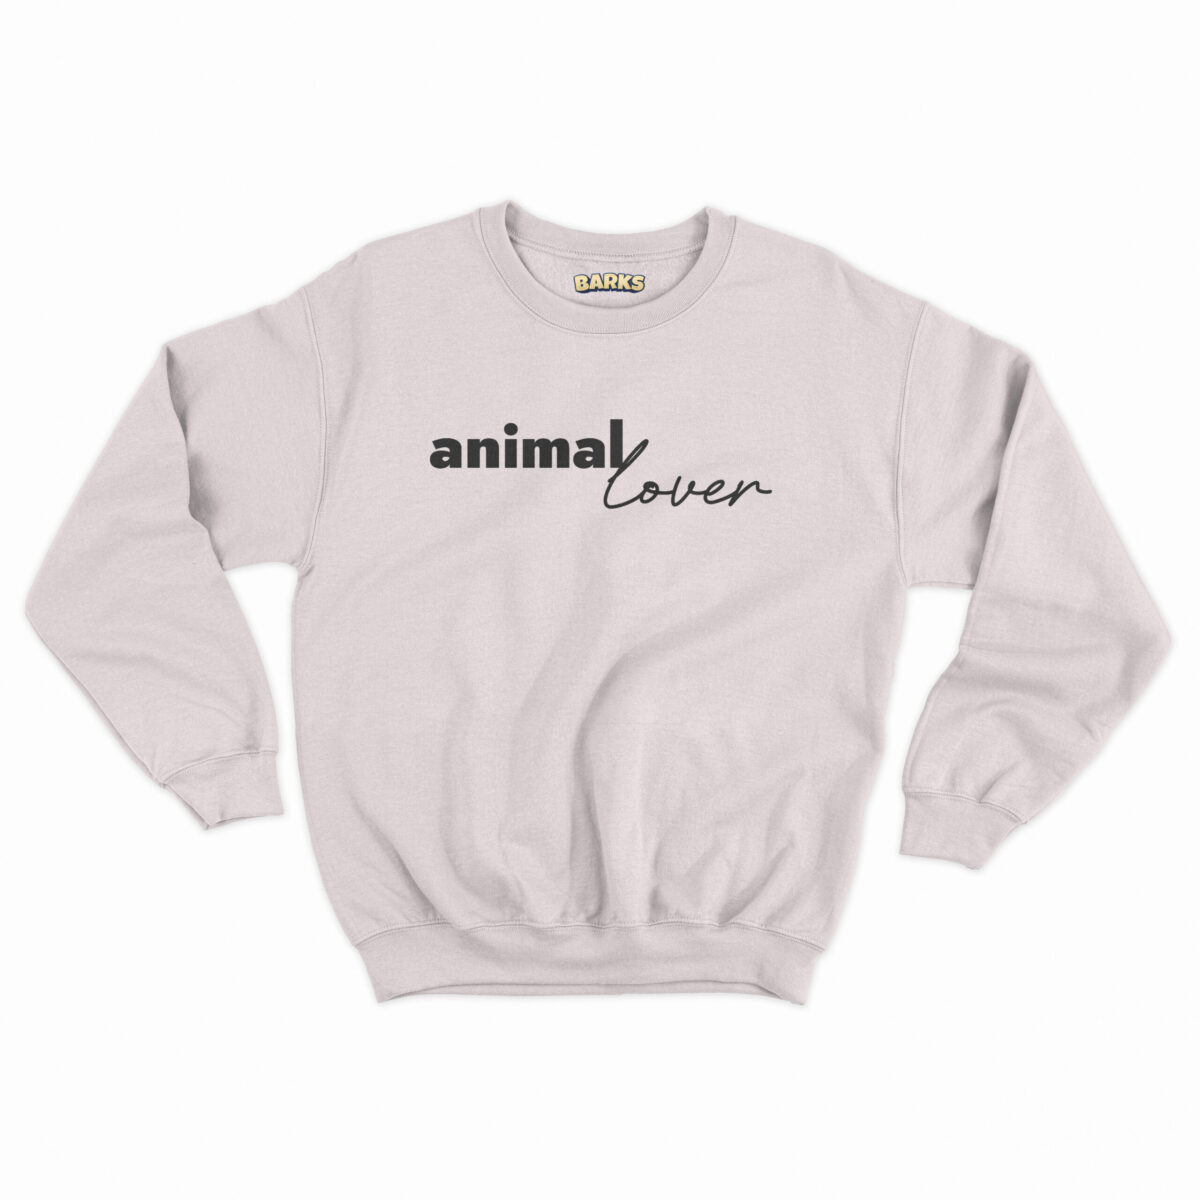 barks sweater animal lover vintage white scaled